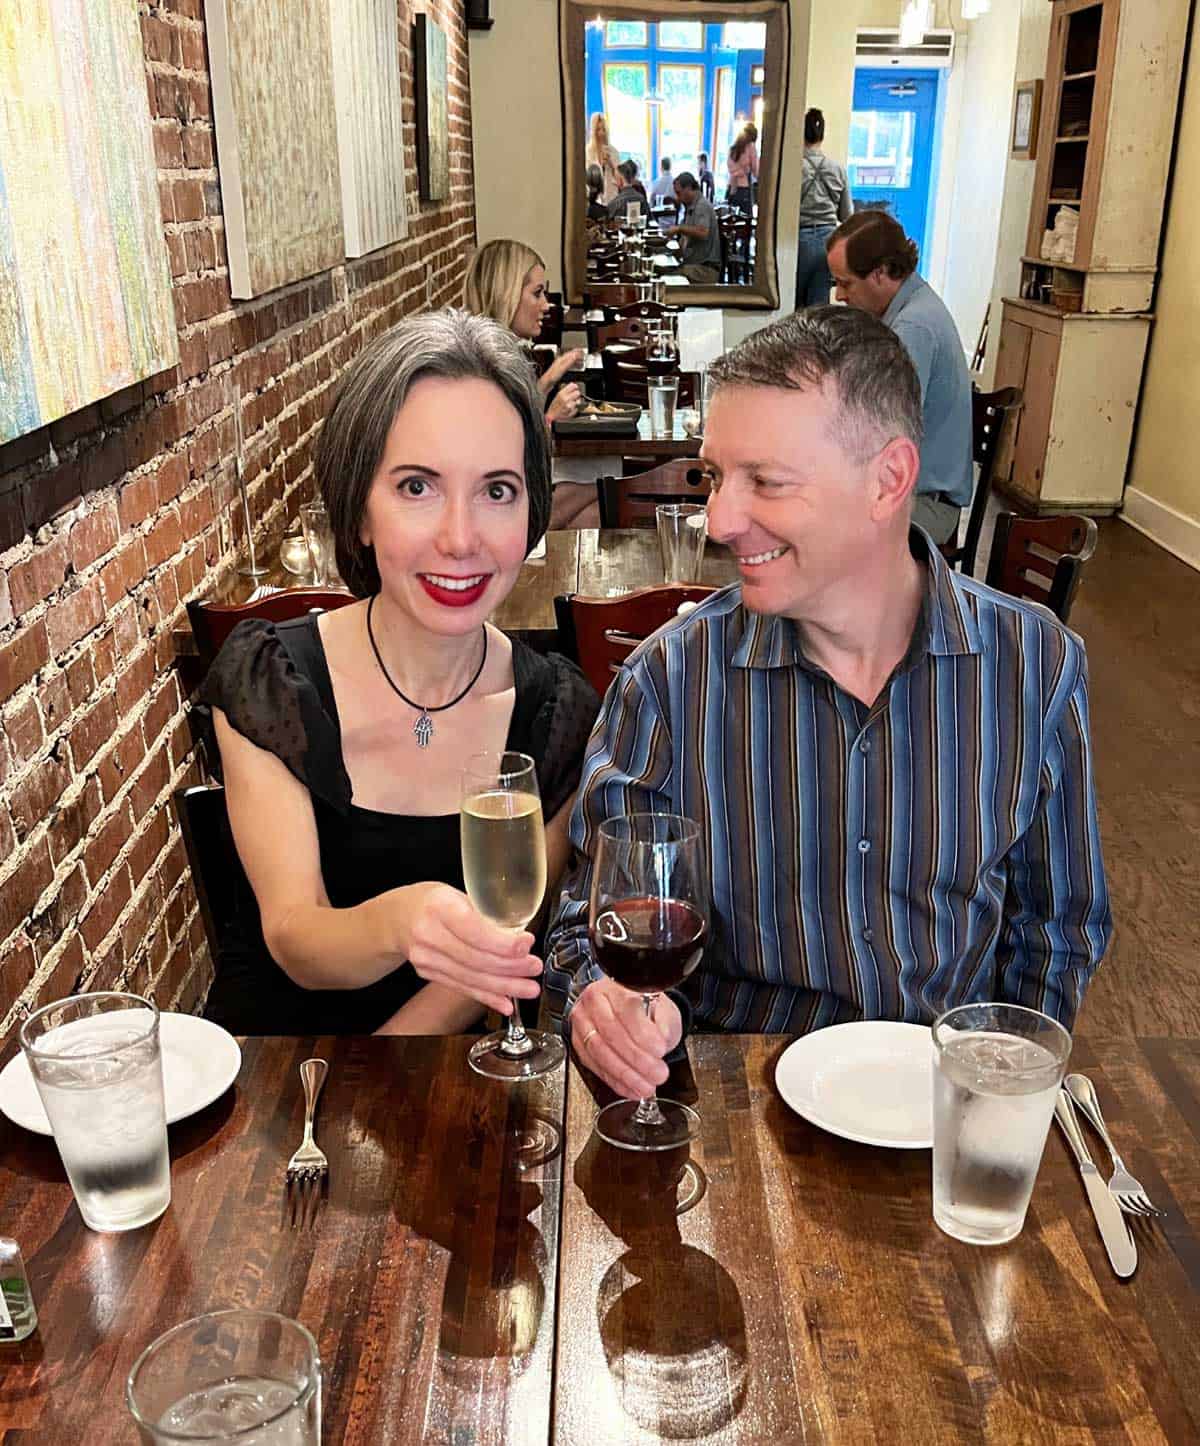 Vered DeLeeuw and her husband at Ecco Restaurant in Memphis.